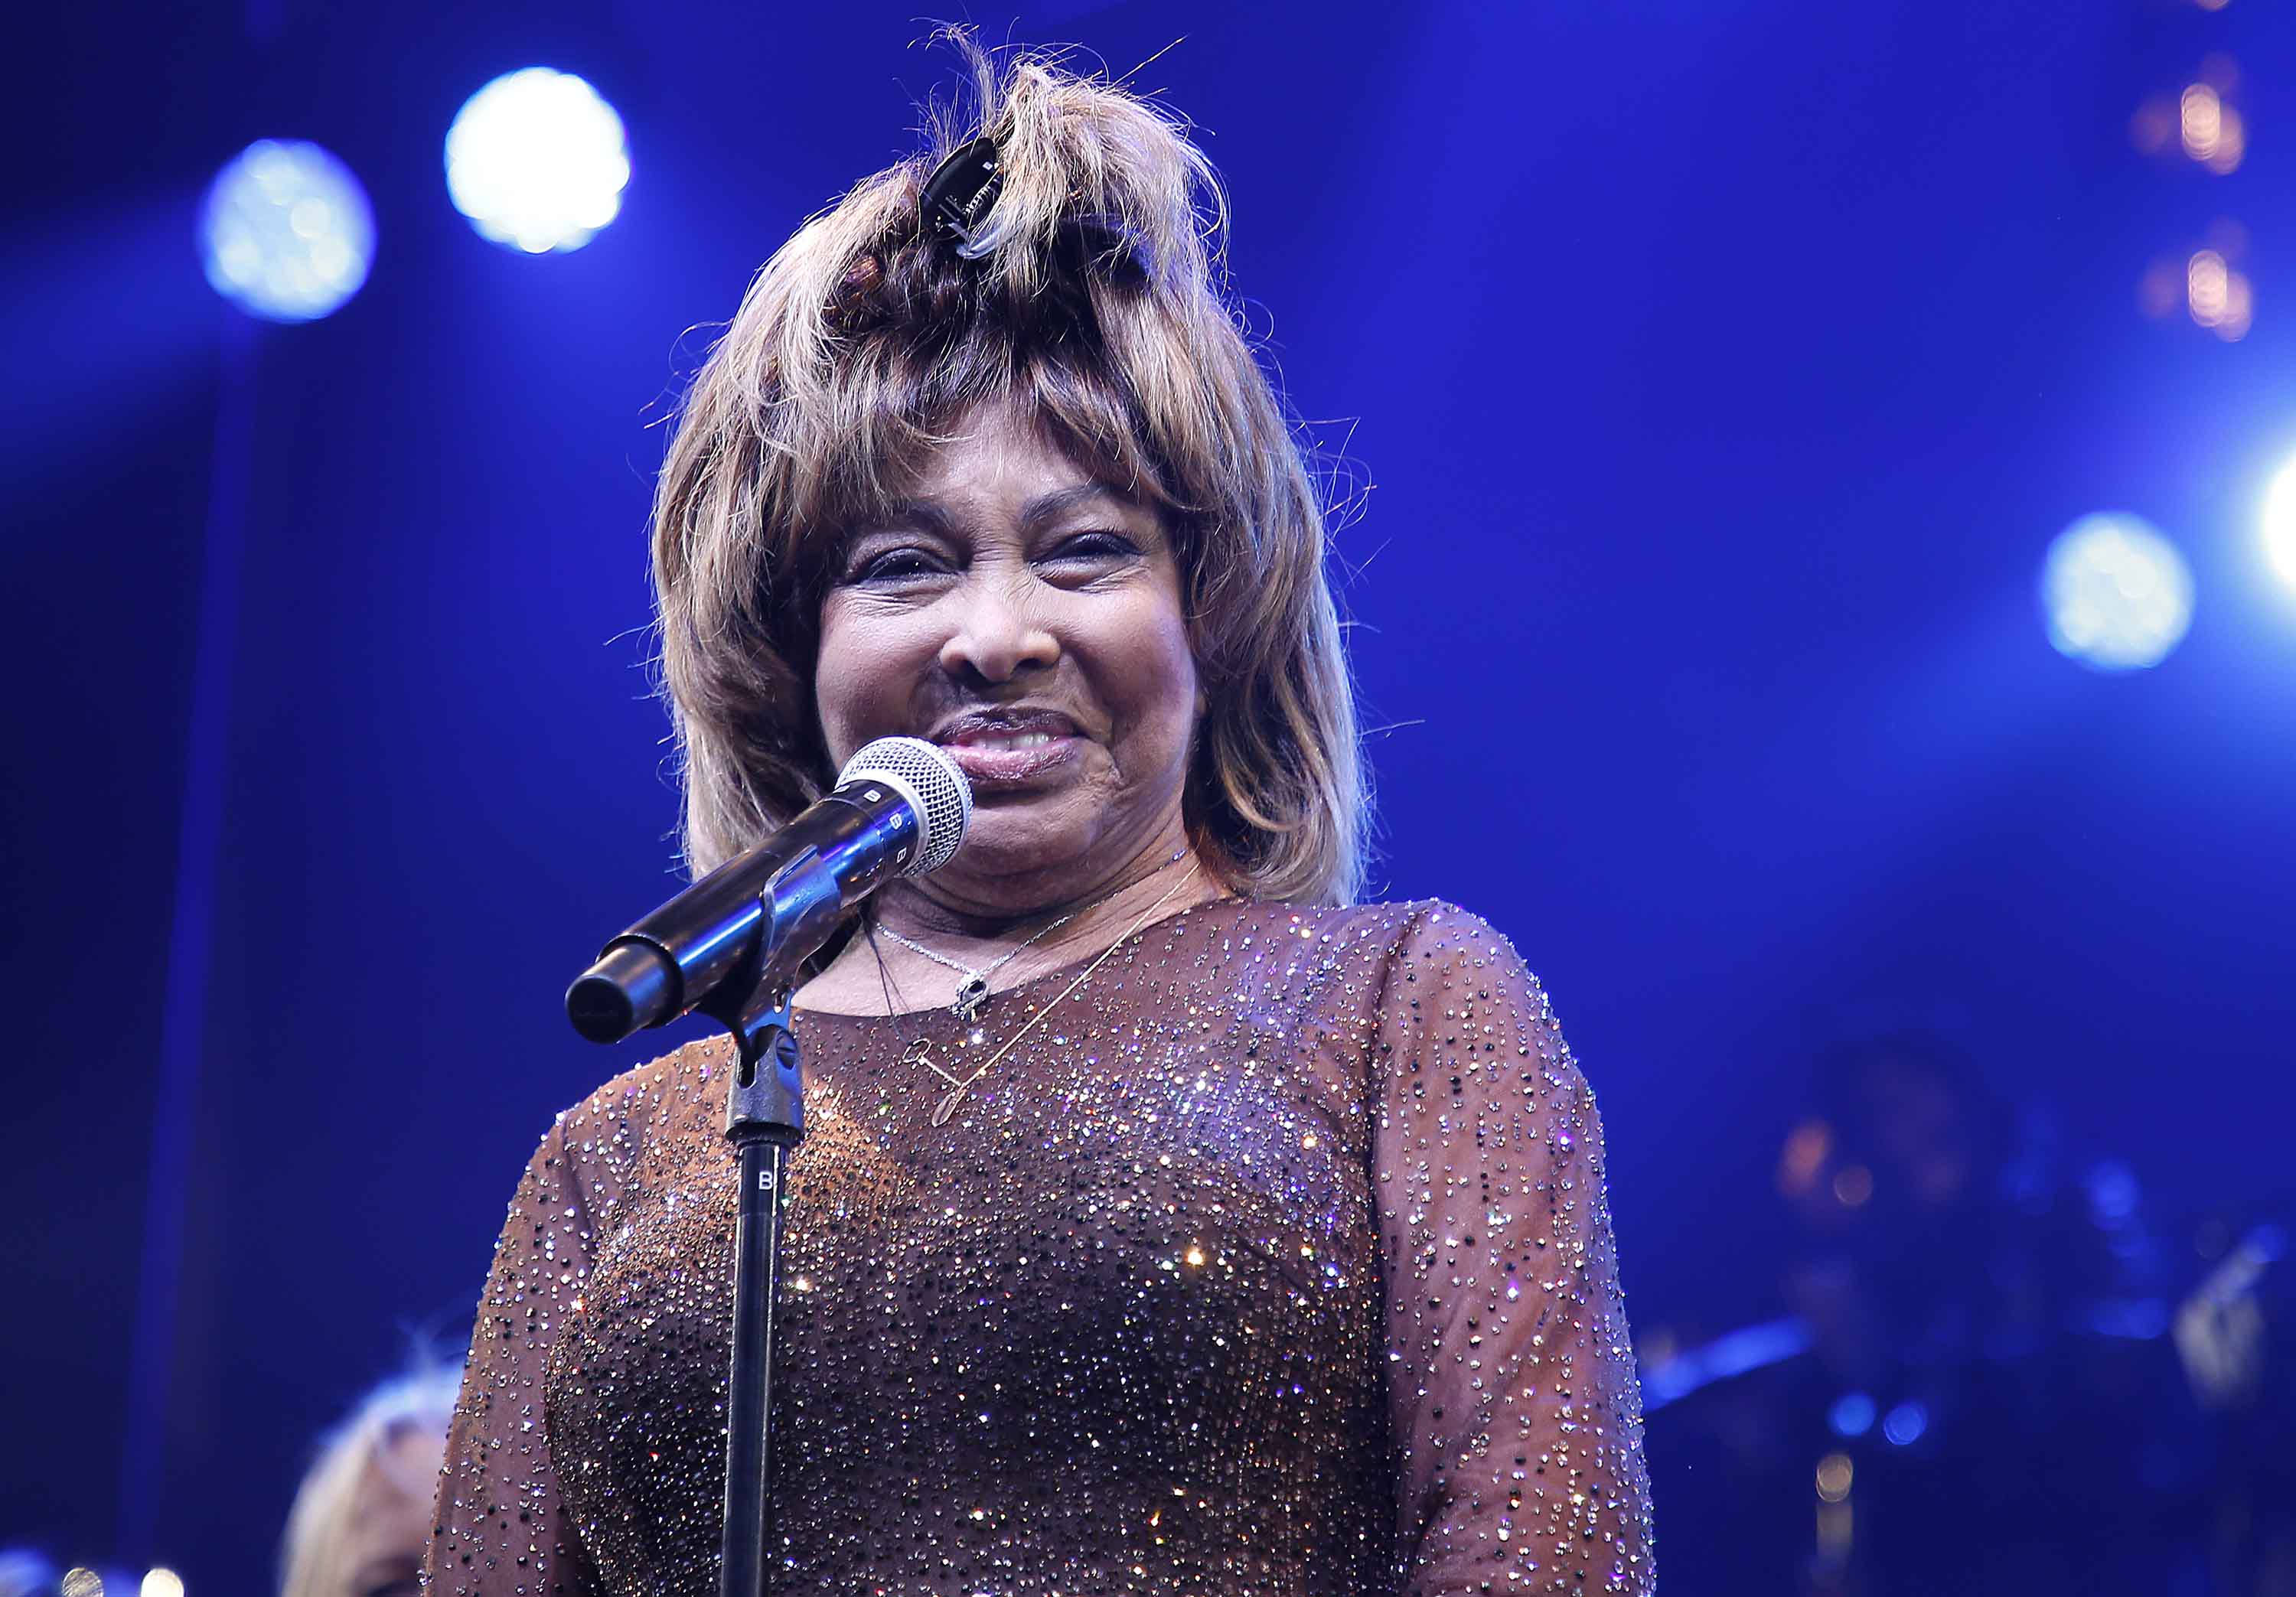 Tina Turner on turning 80: 'I look great' - CNN Video